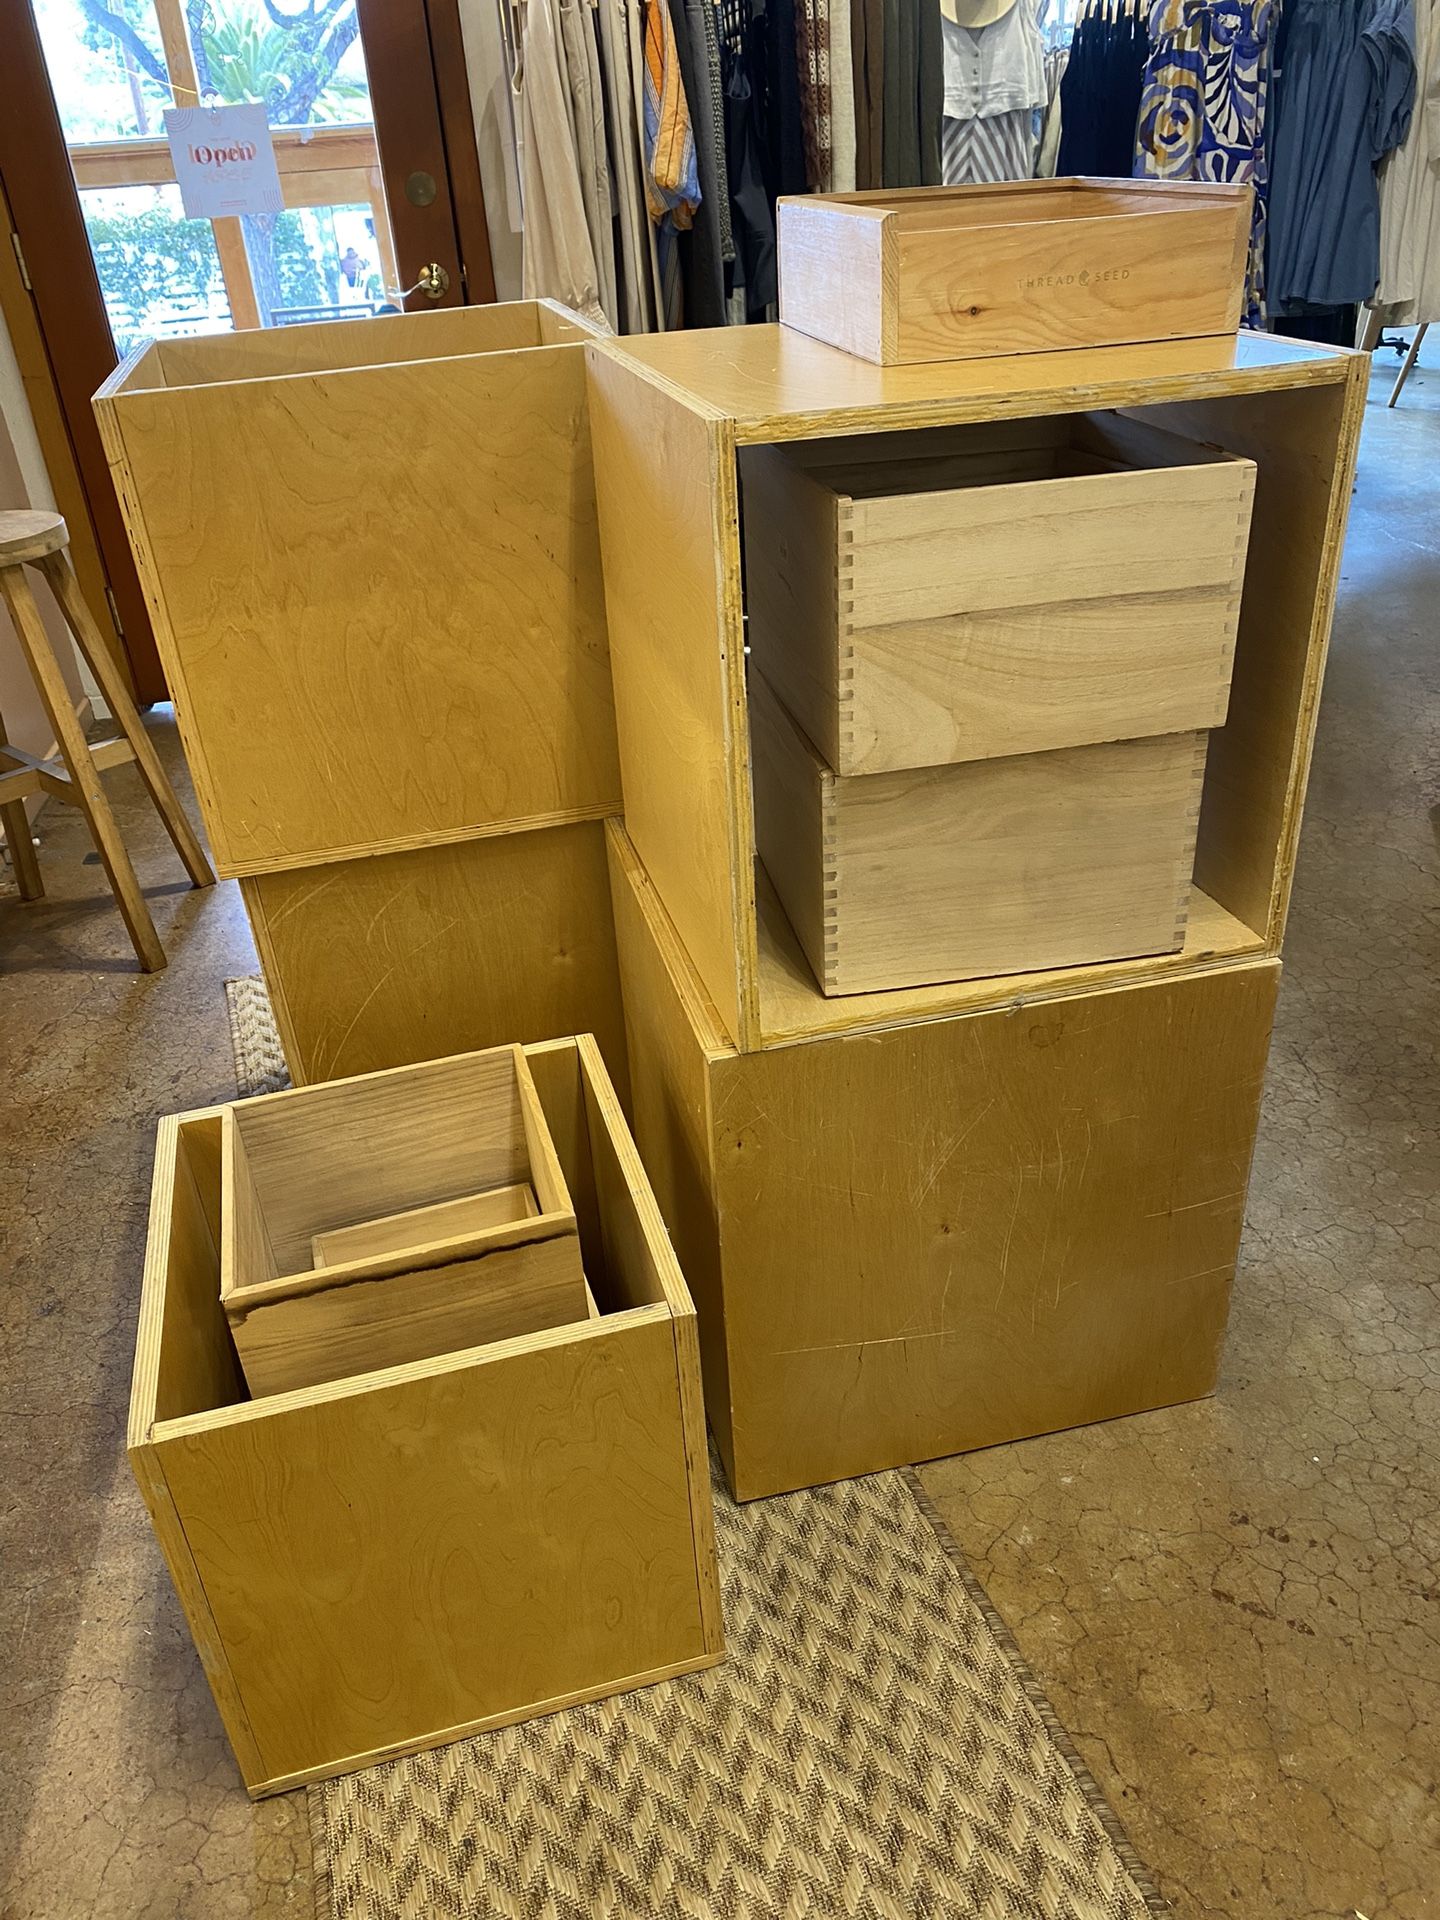 FREE Wood Boxes